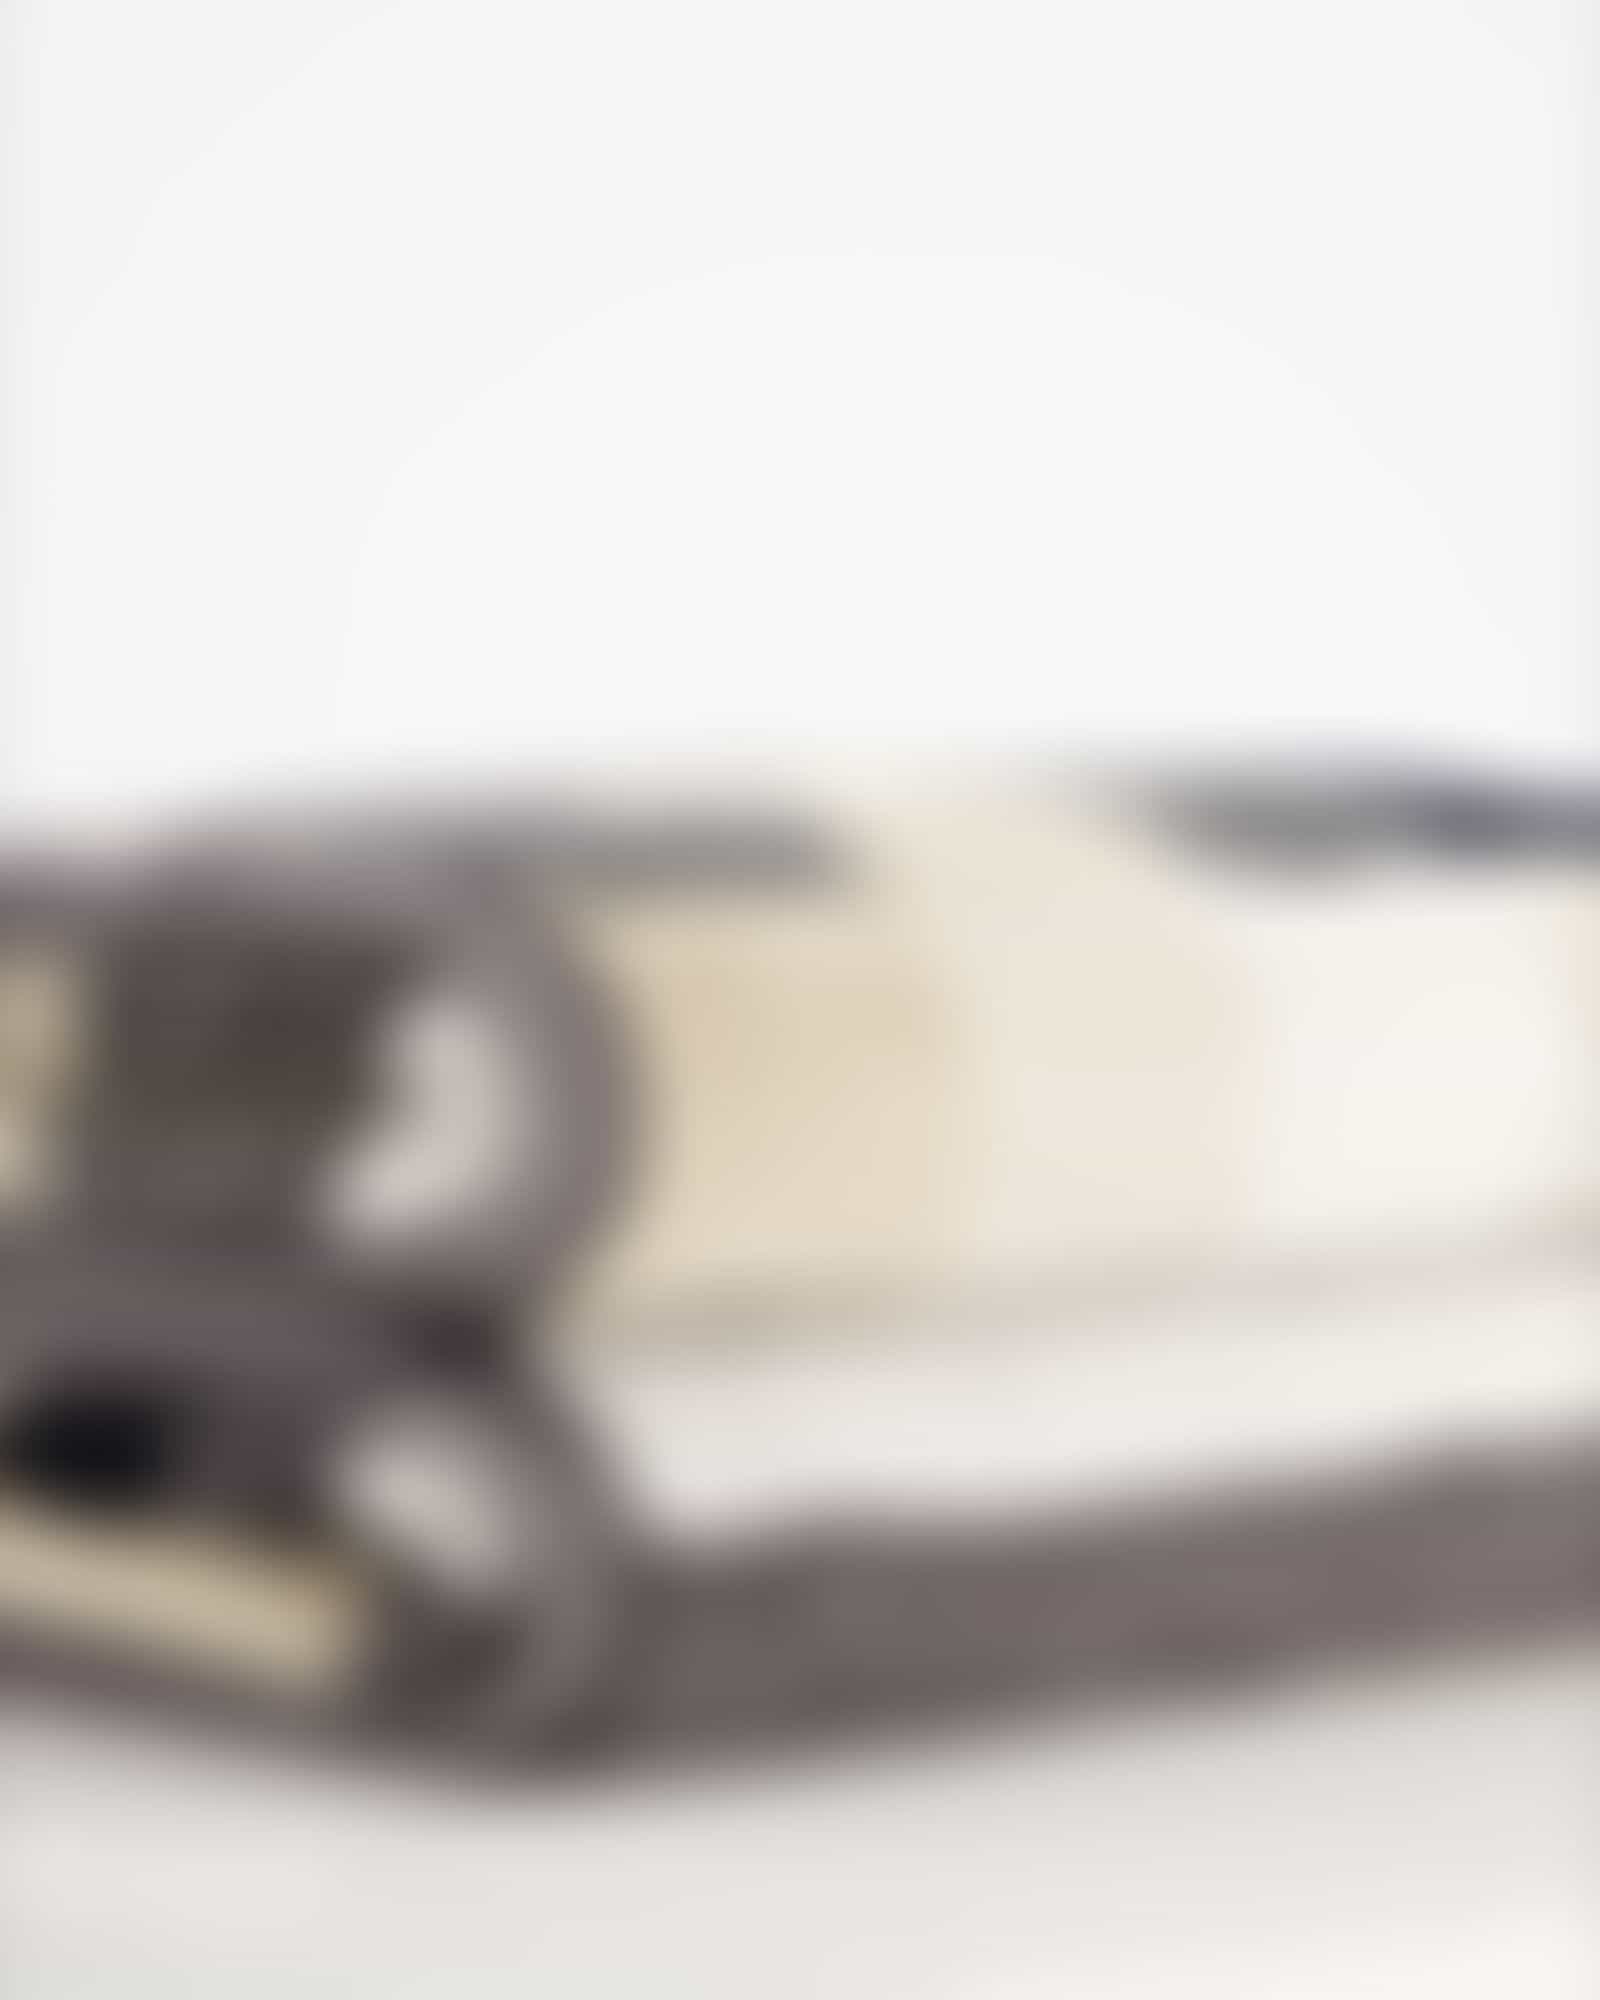 JOOP! Handtücher Vibe Streifen 1698 - Farbe: stein - 37 - Duschtuch 80x150 cm